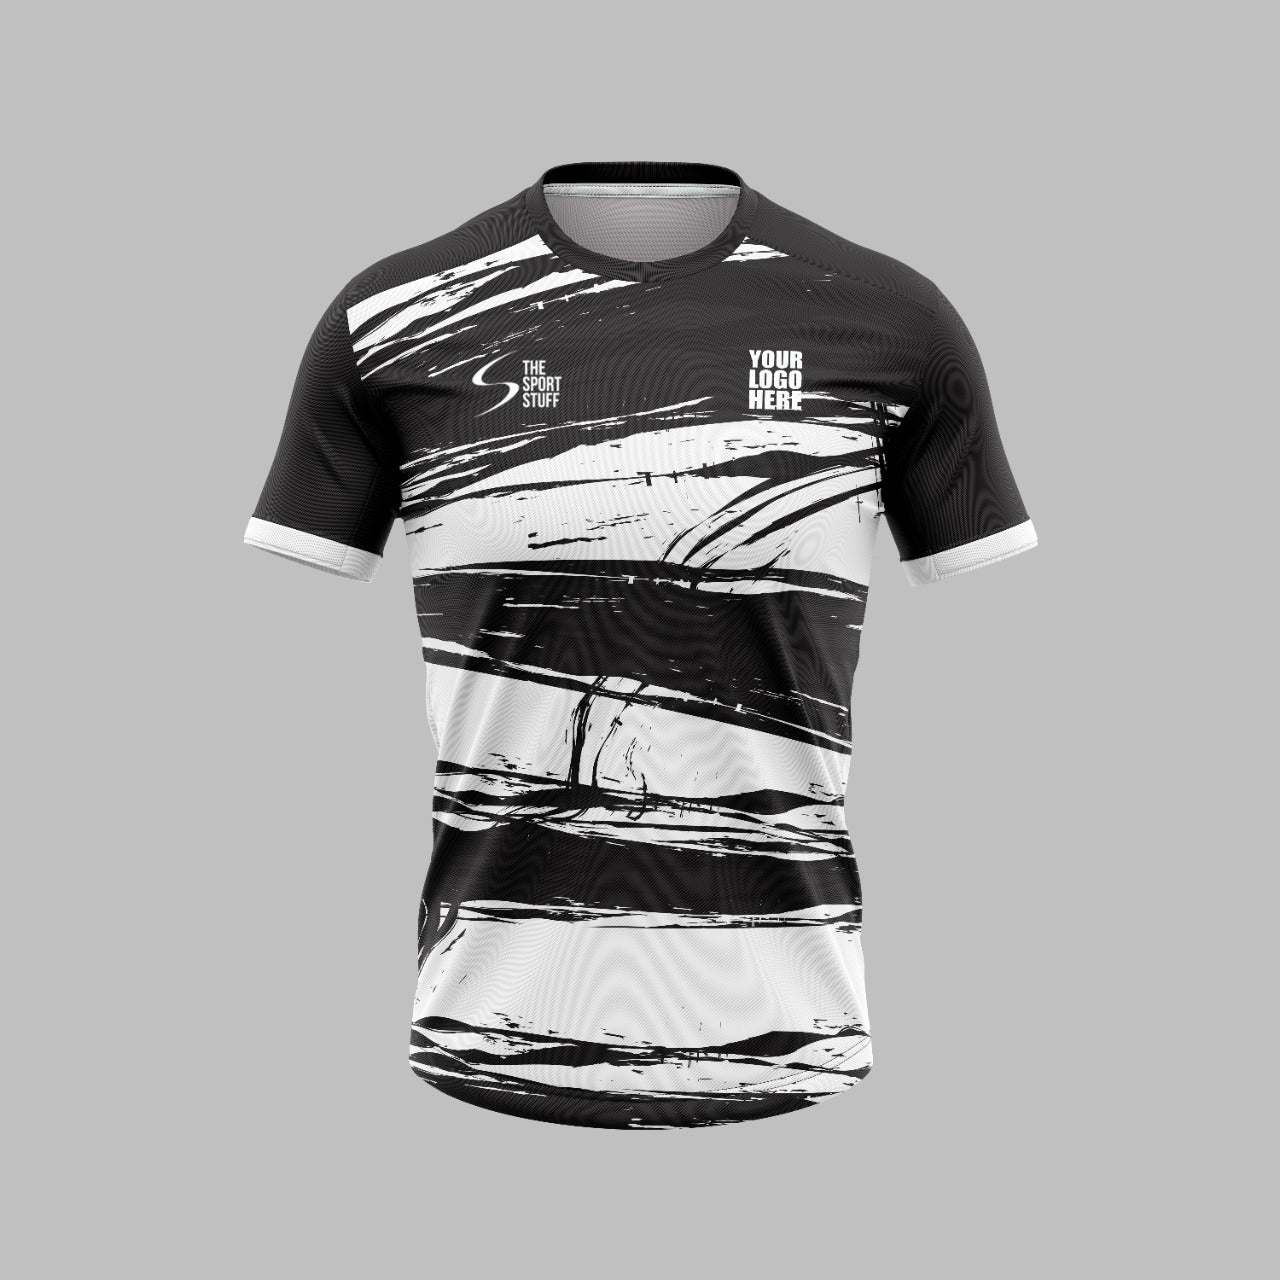 Black White Customized Football Team Jersey Design